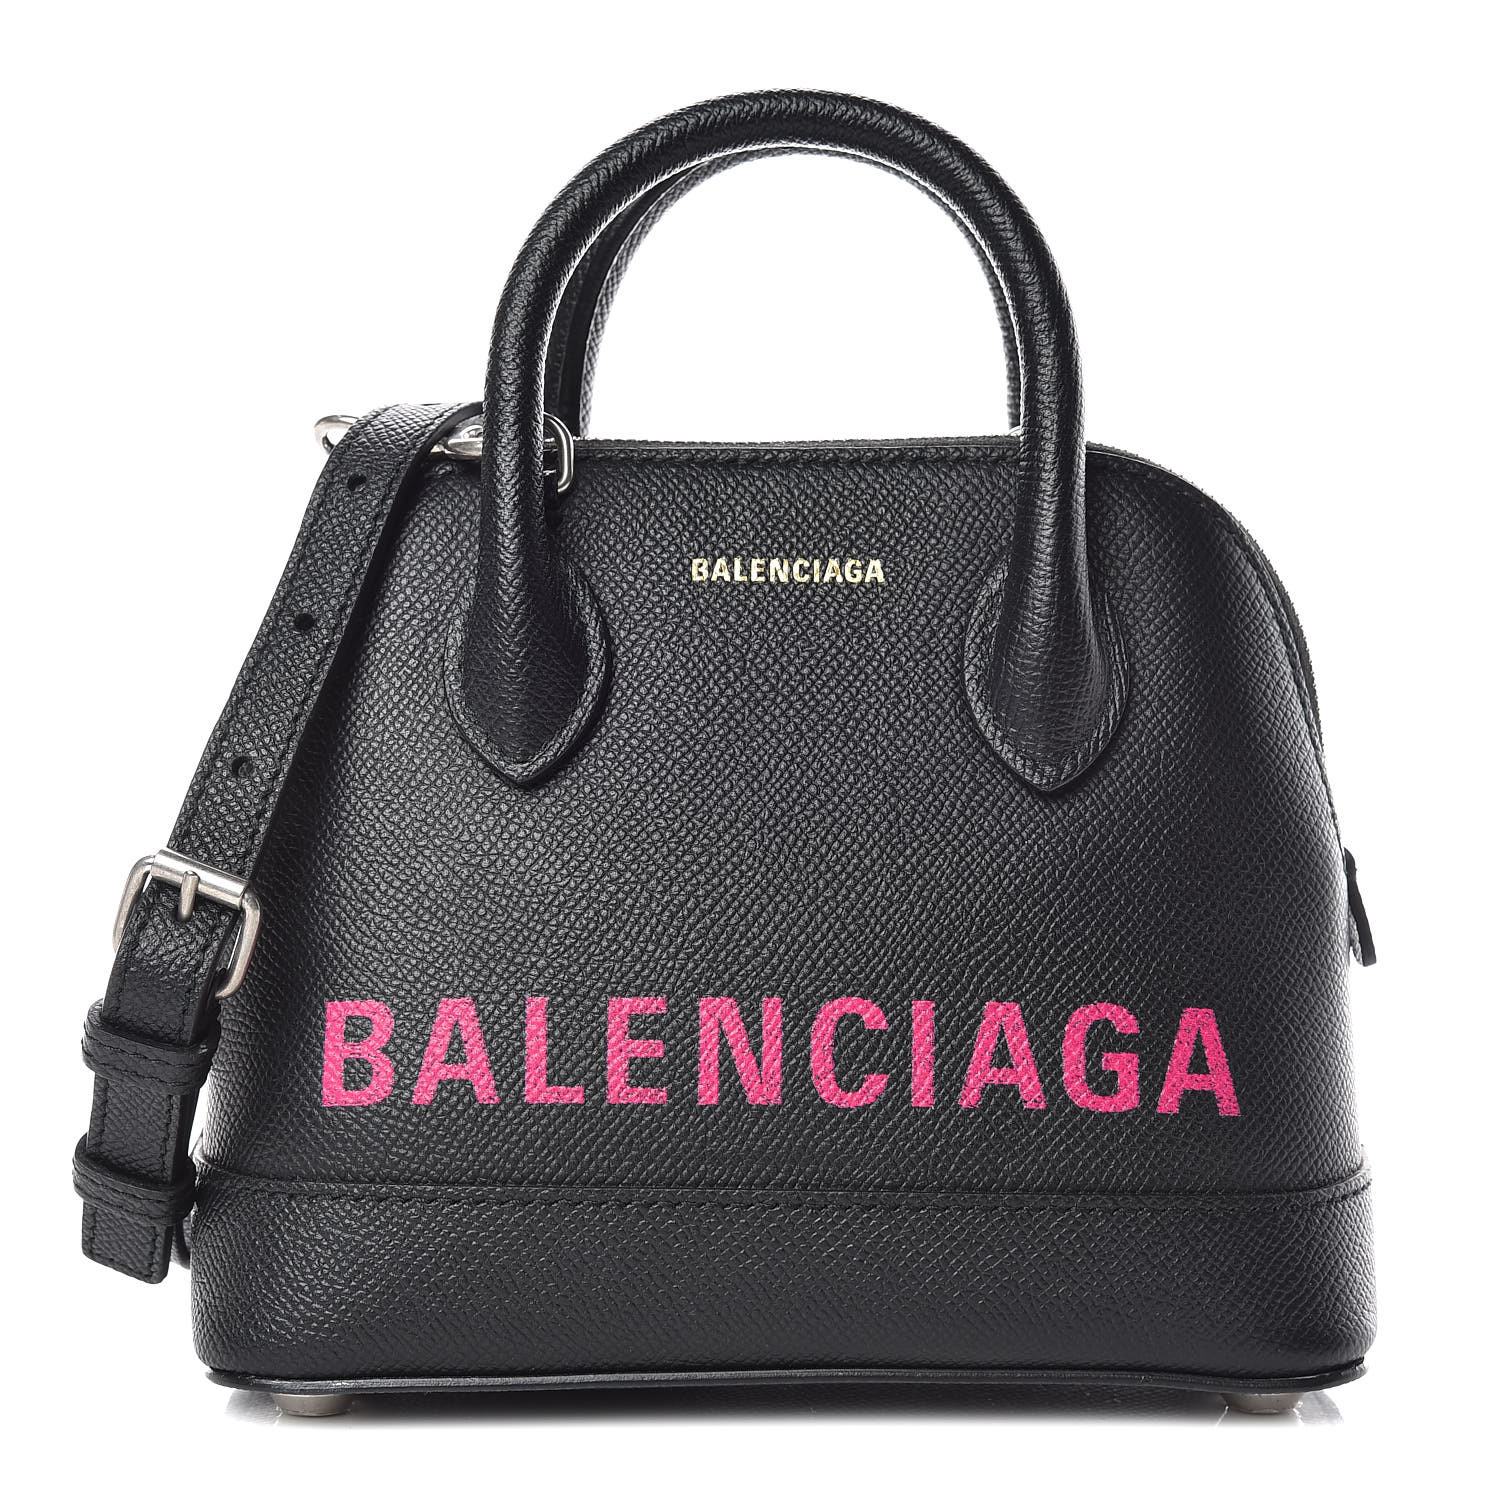 balenciaga bag with writing